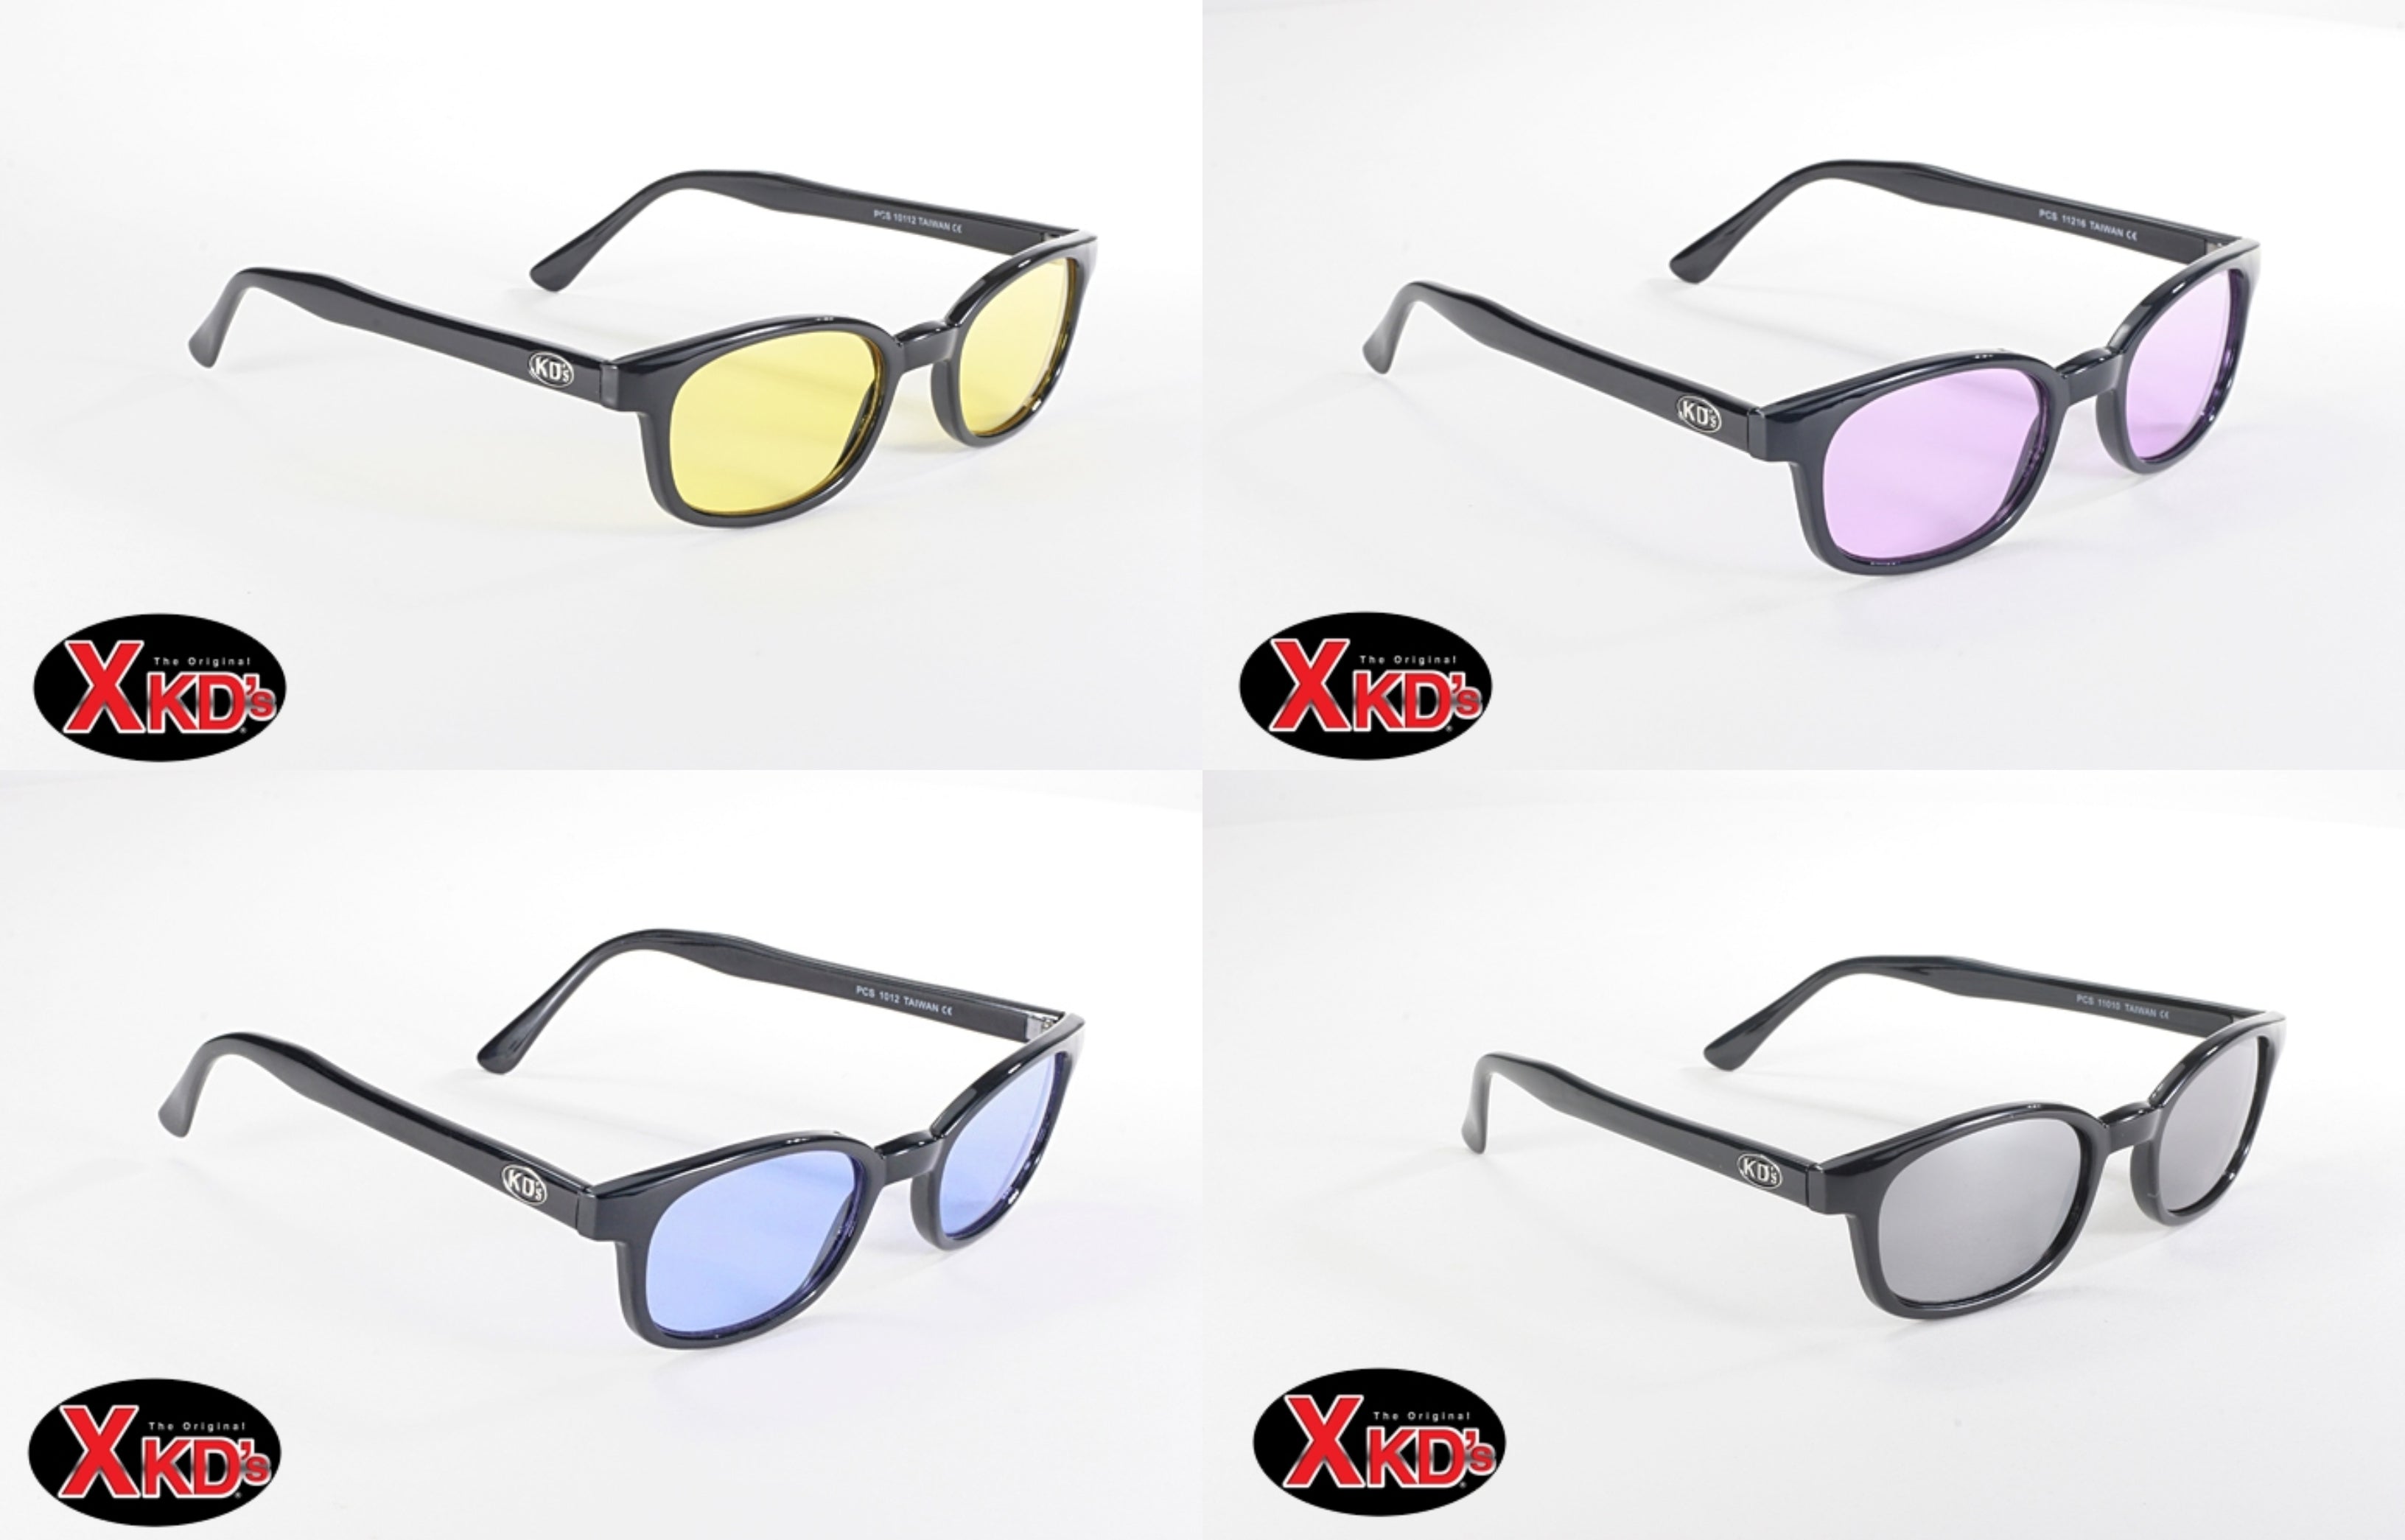 X-KD Sunglasses - 20% Larger Gloss Black Frame